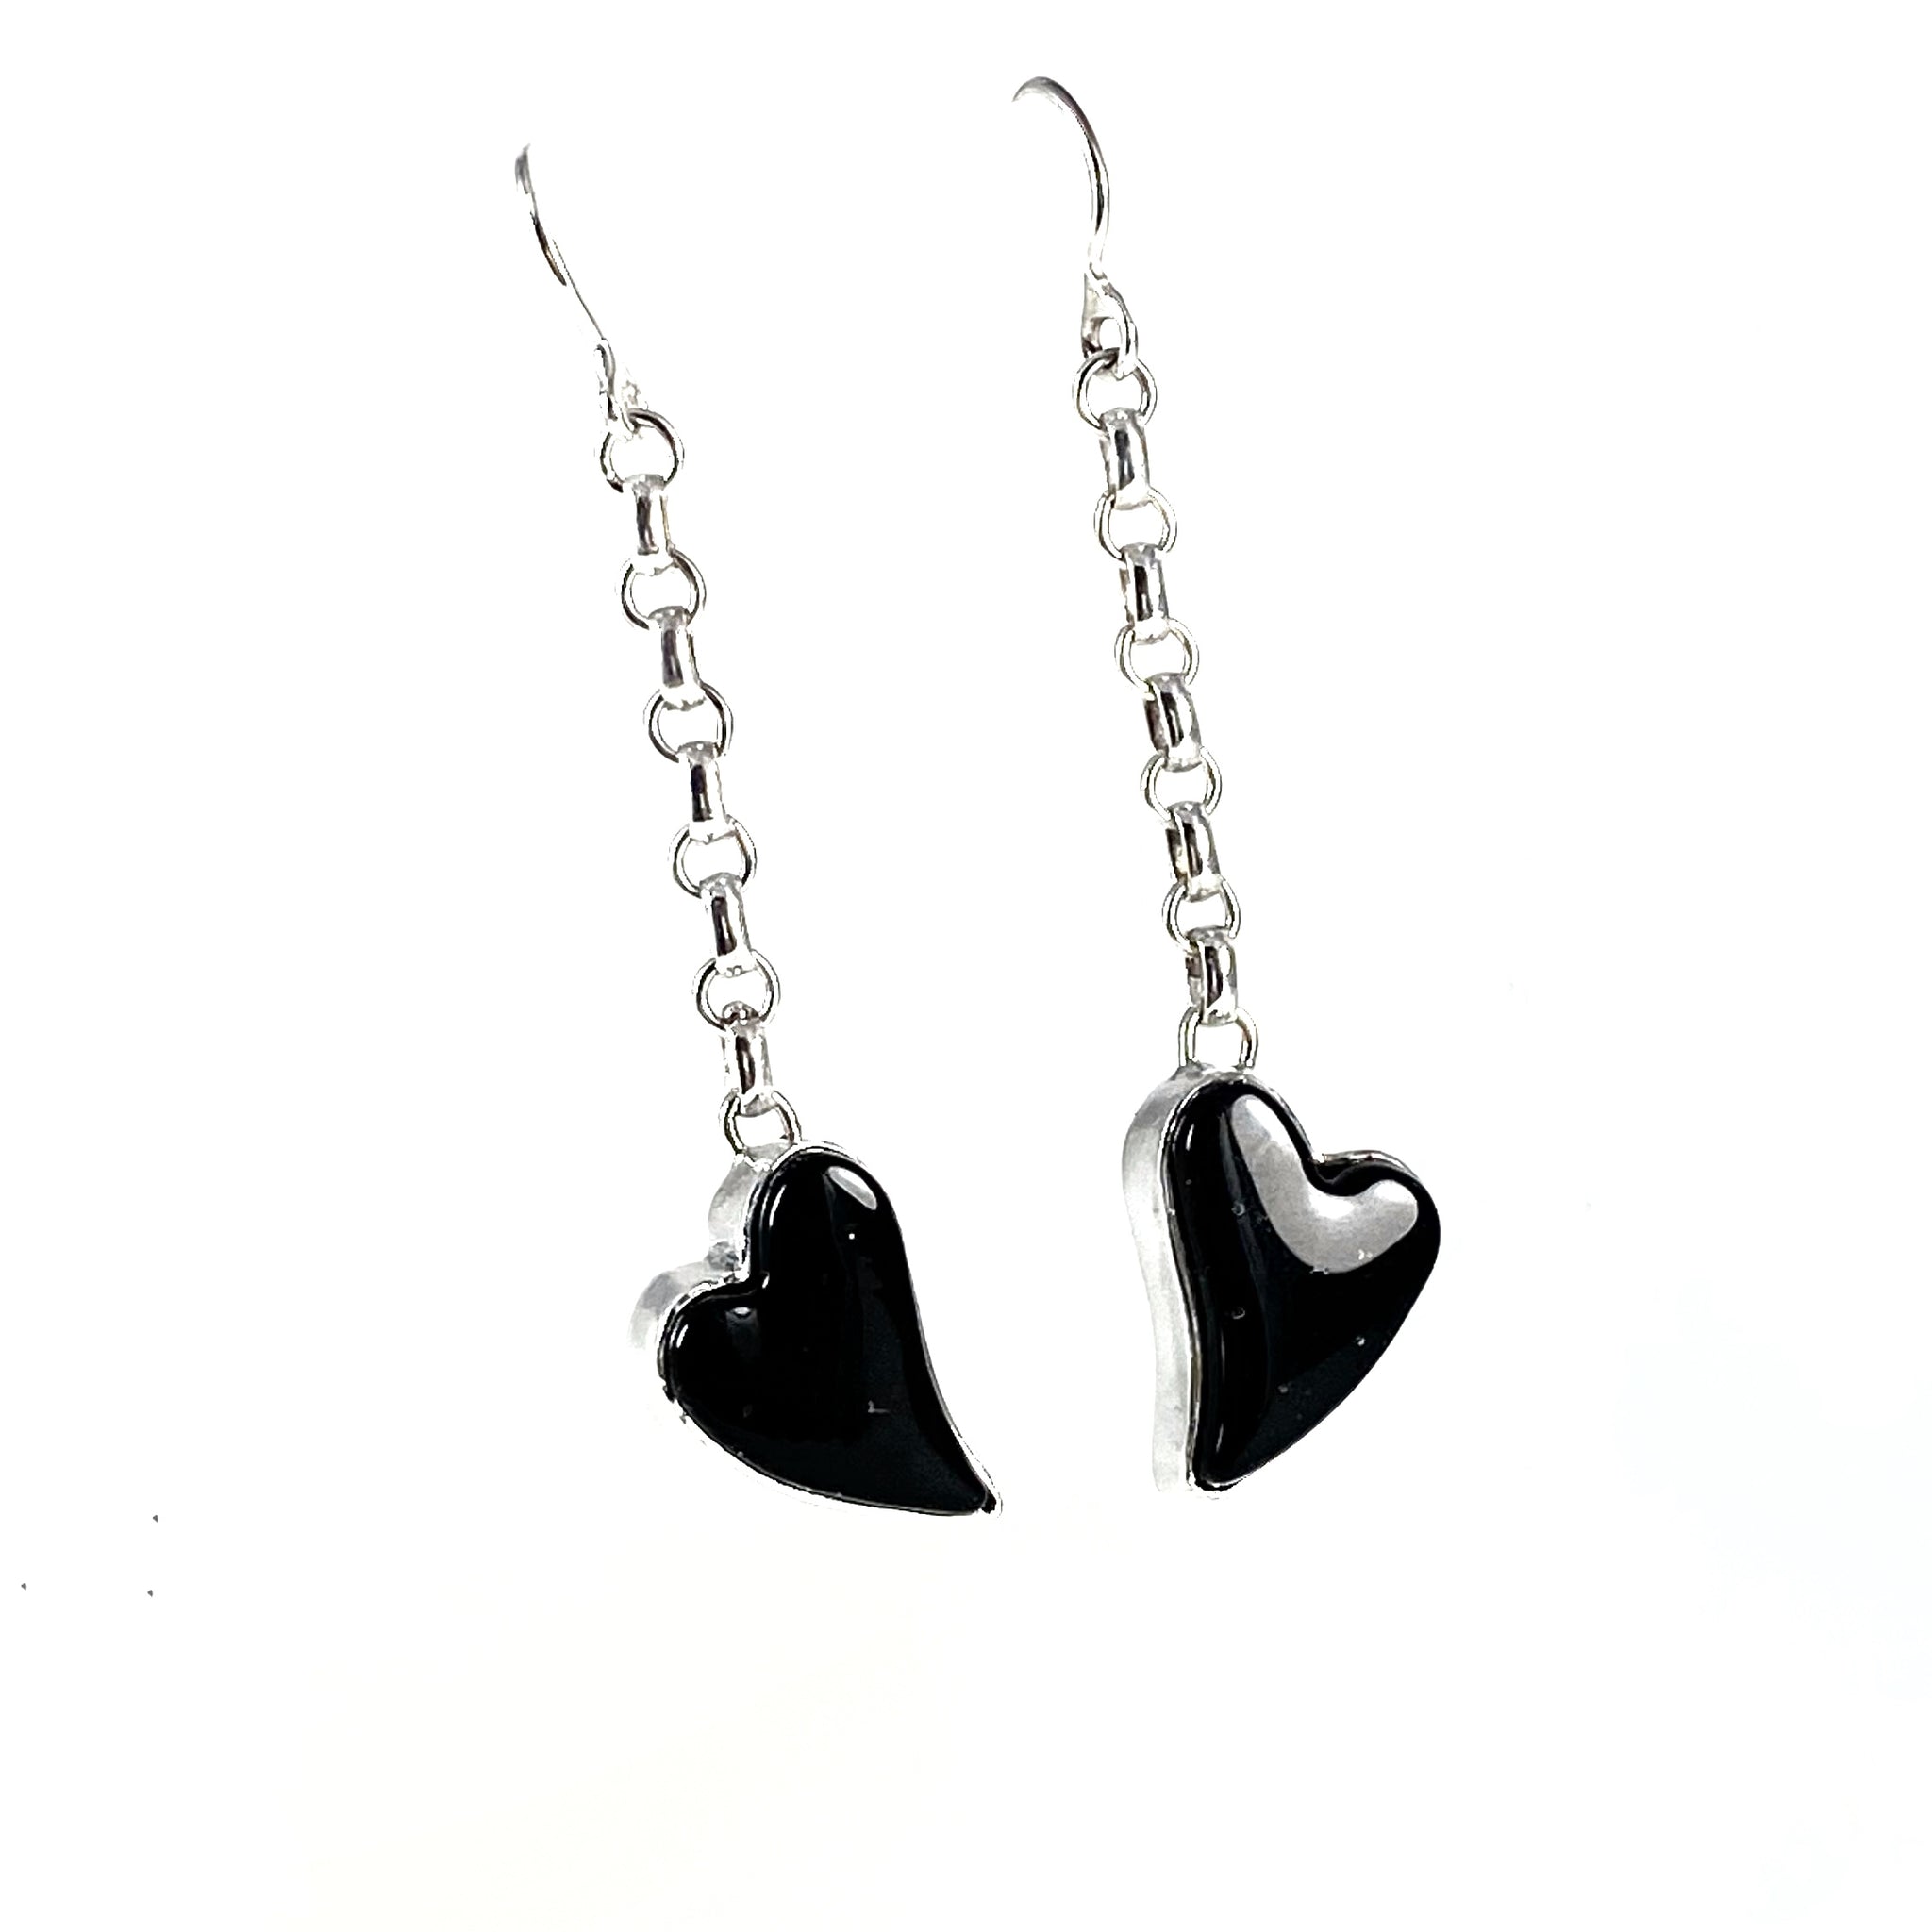 Heart Earrings with Chain in Black